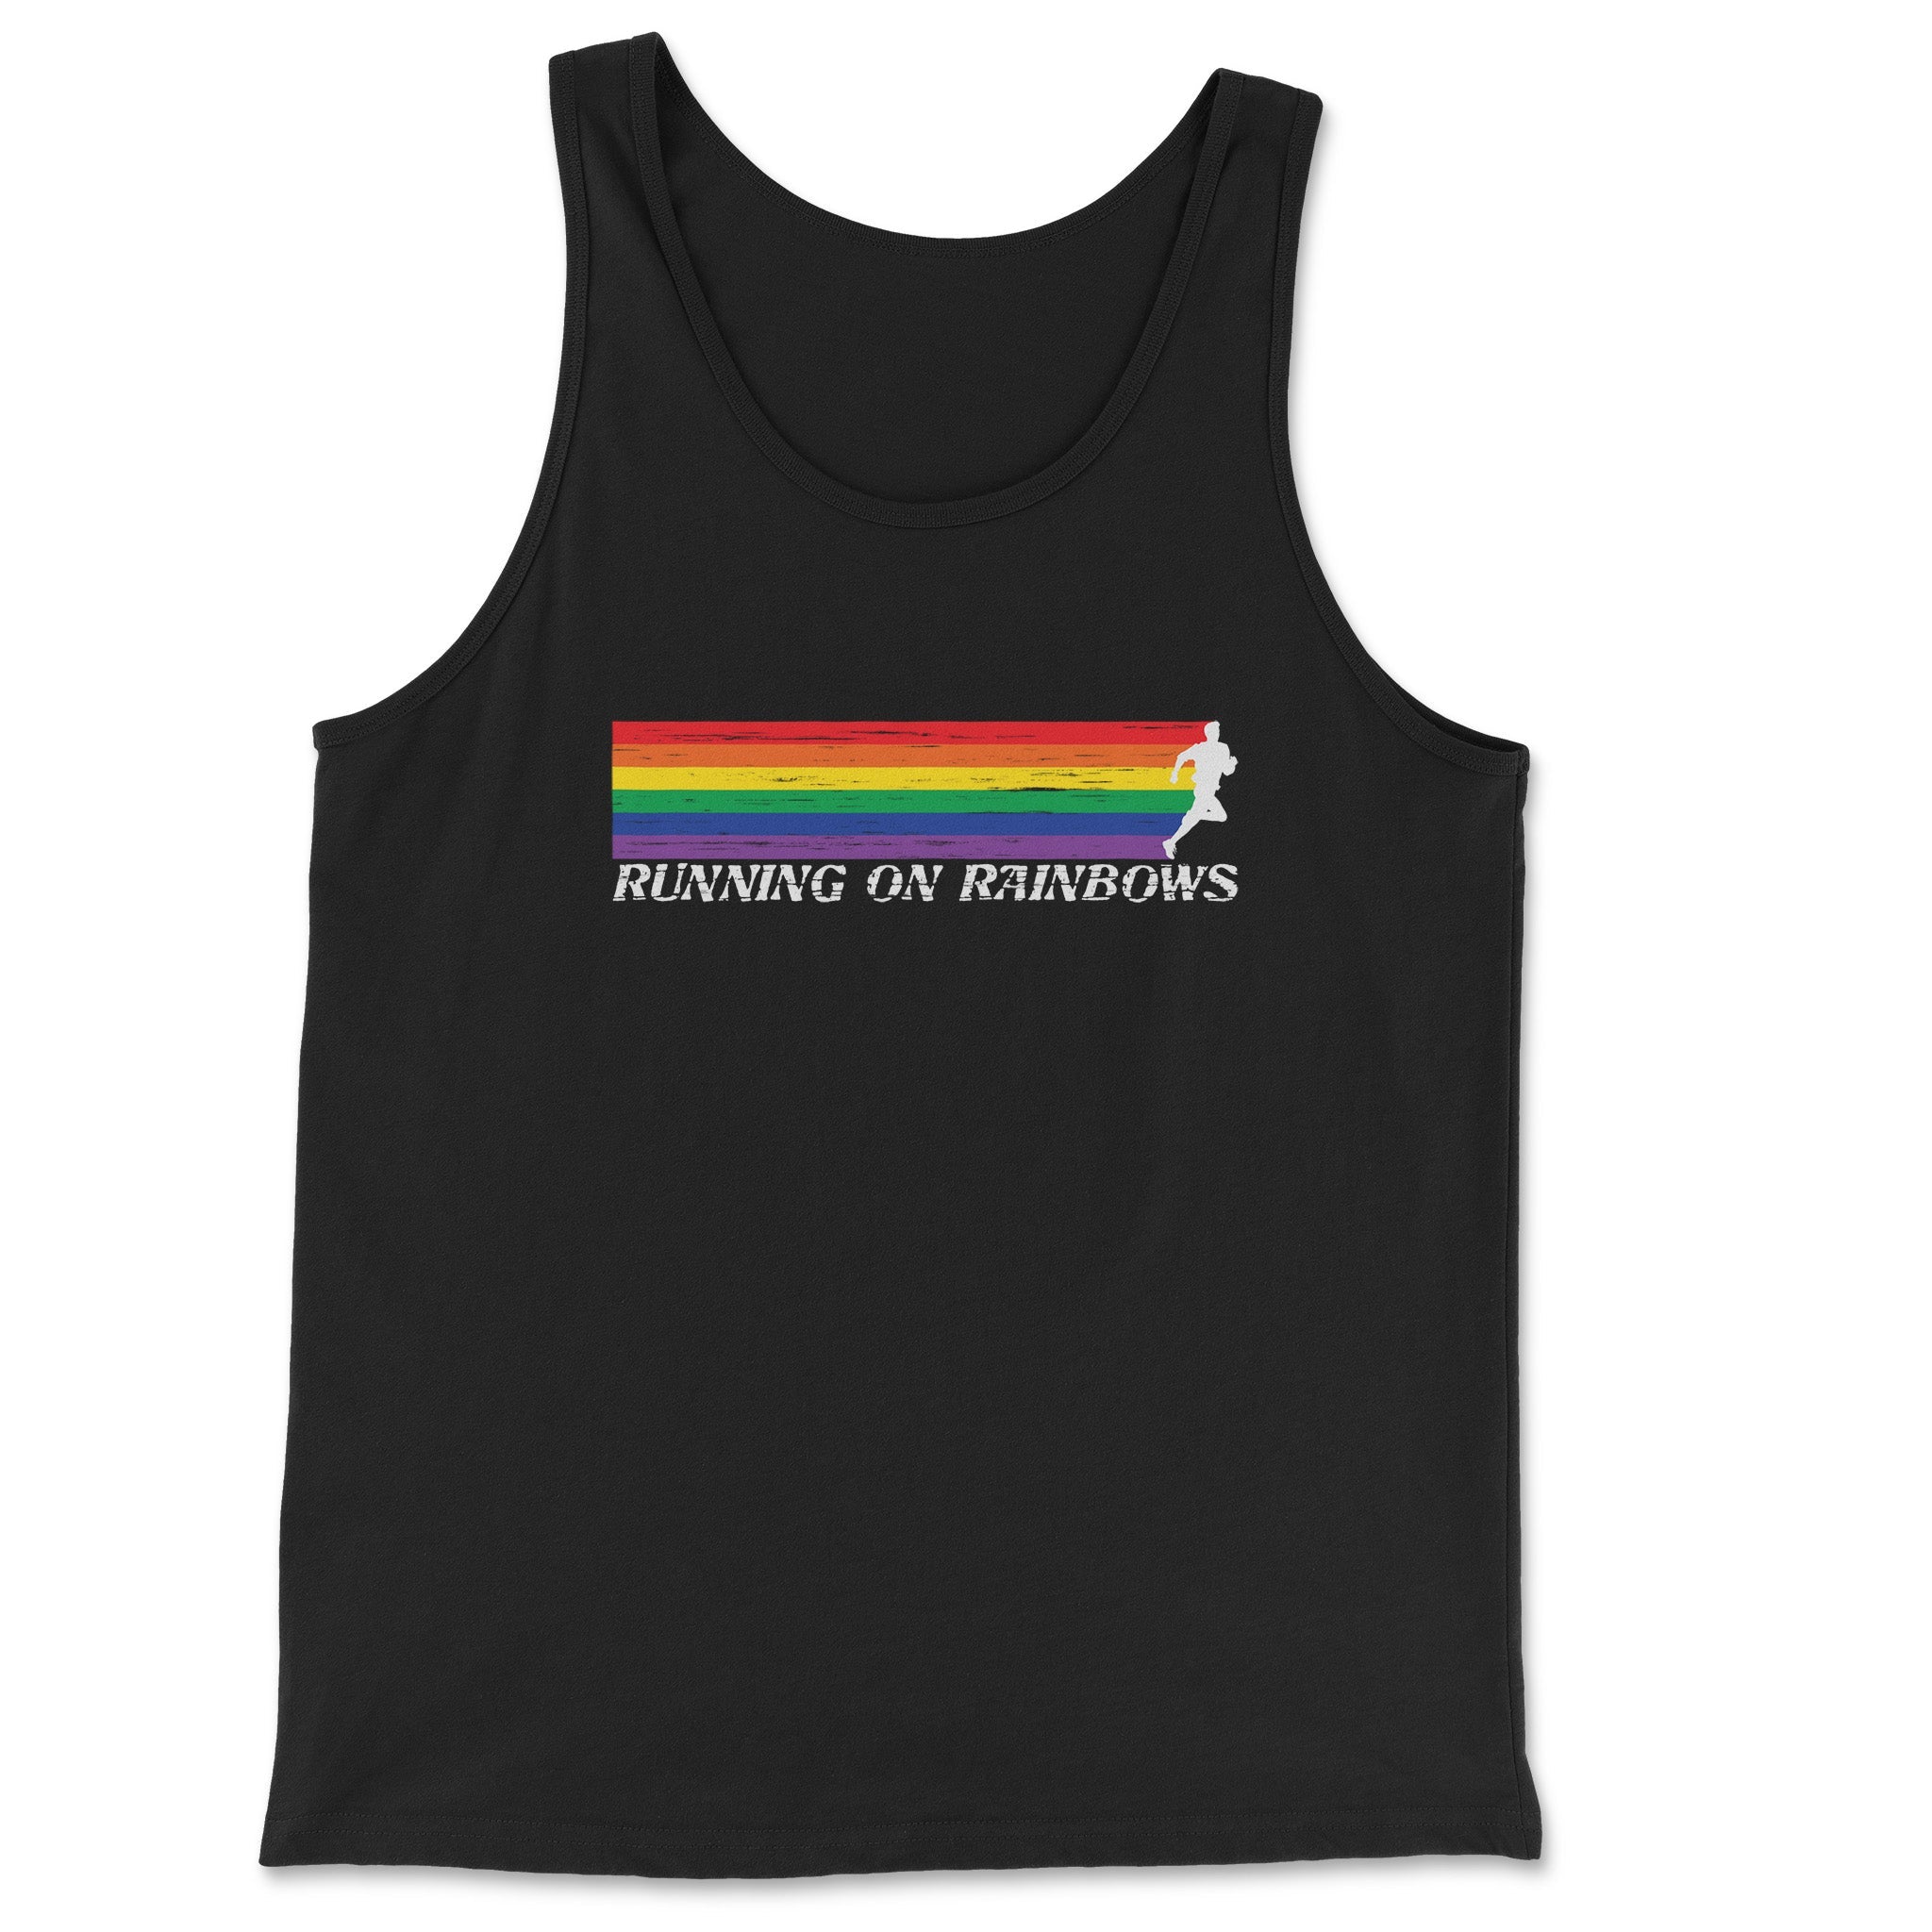 "Running on Rainbows" Tank Top - Athletic Gay Runner Pride Statement - Hunky Tops